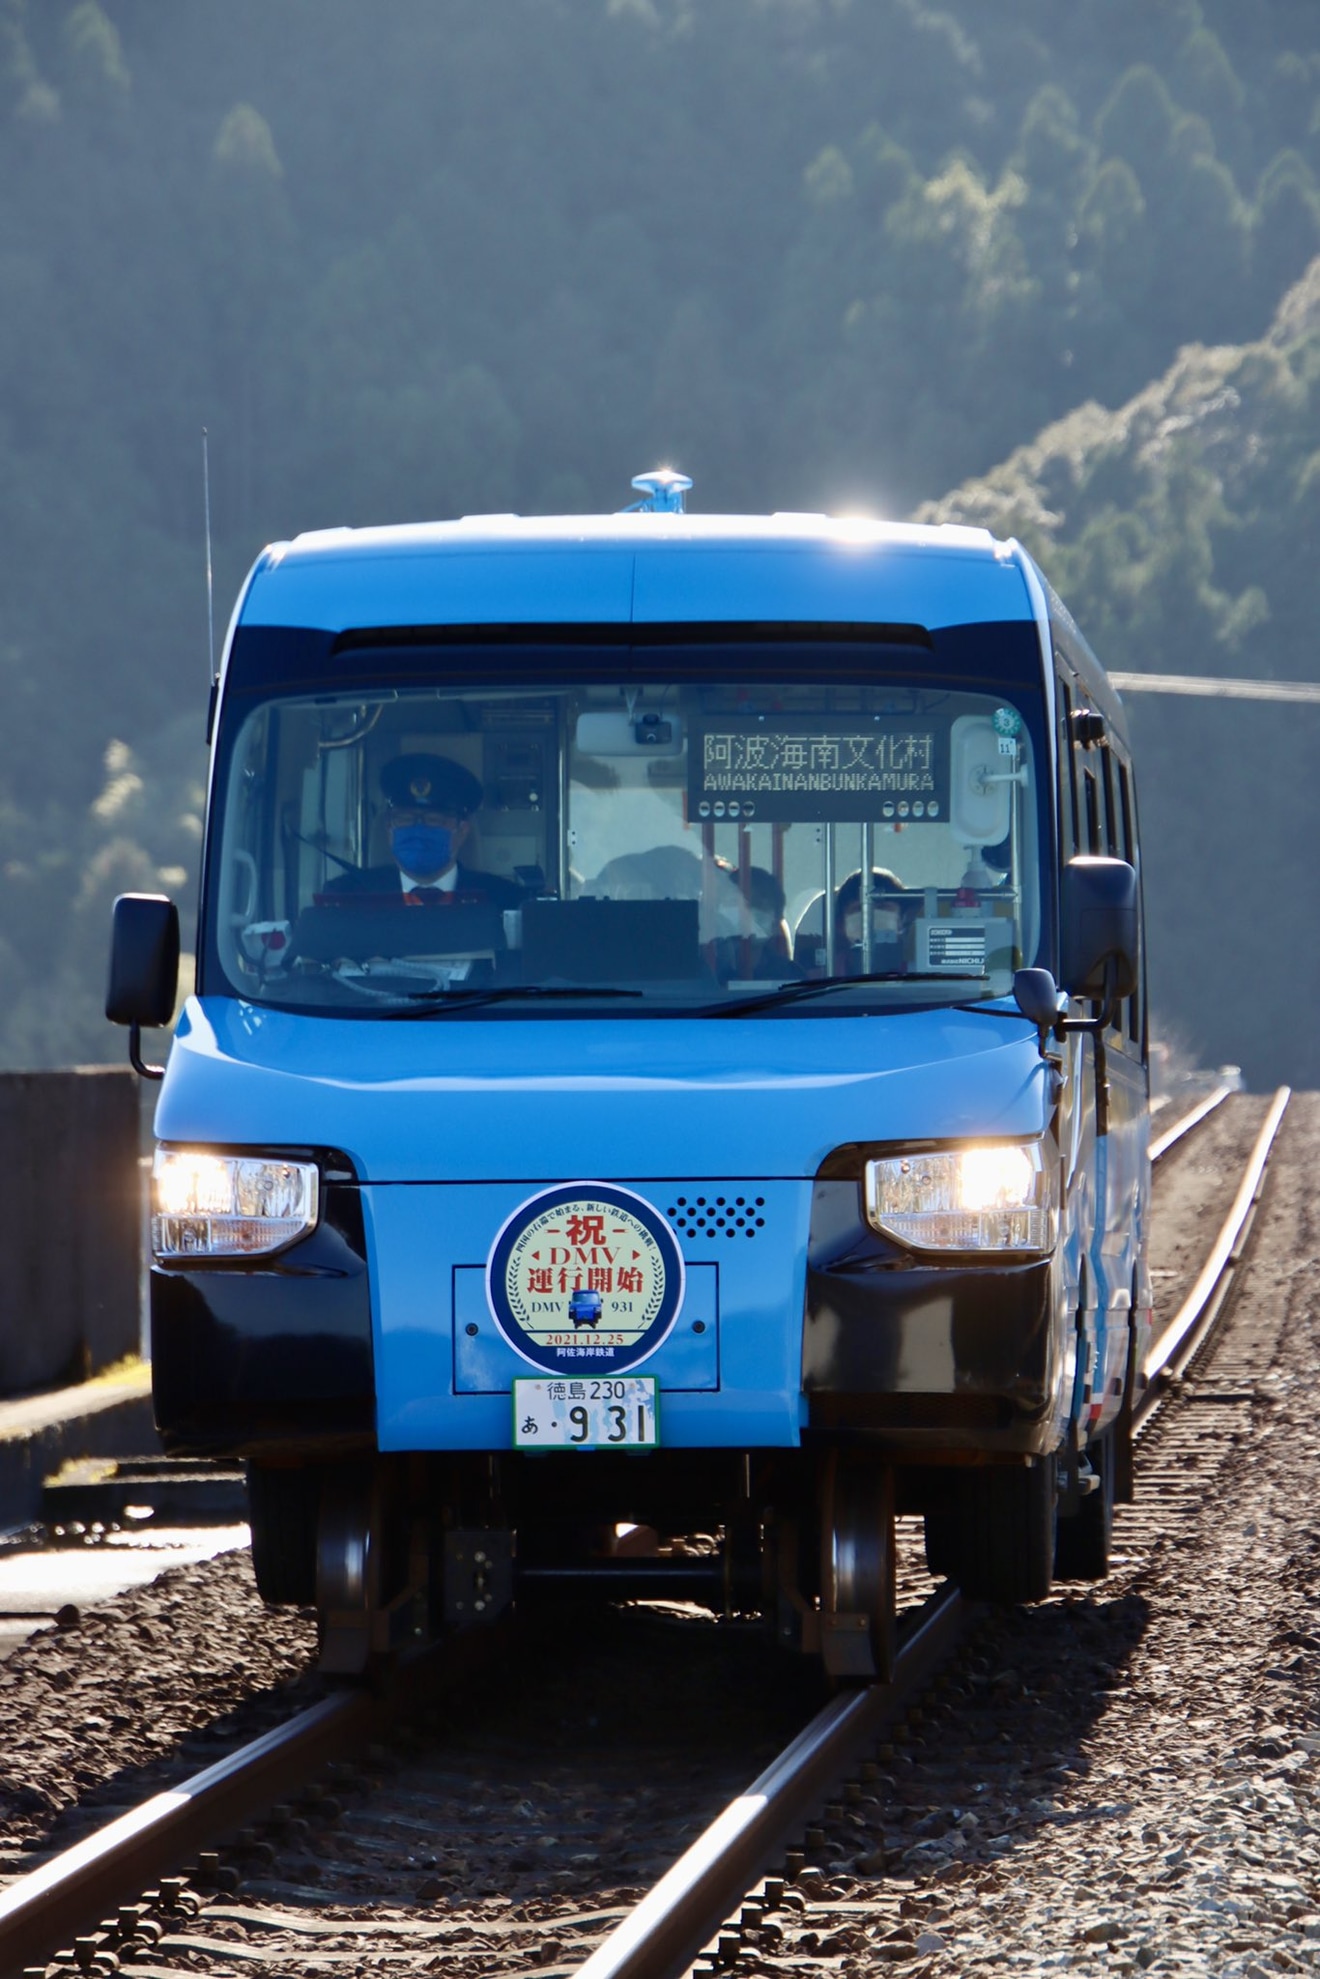 【阿佐鉄】DMV93形気動車が営業運転を開始の拡大写真